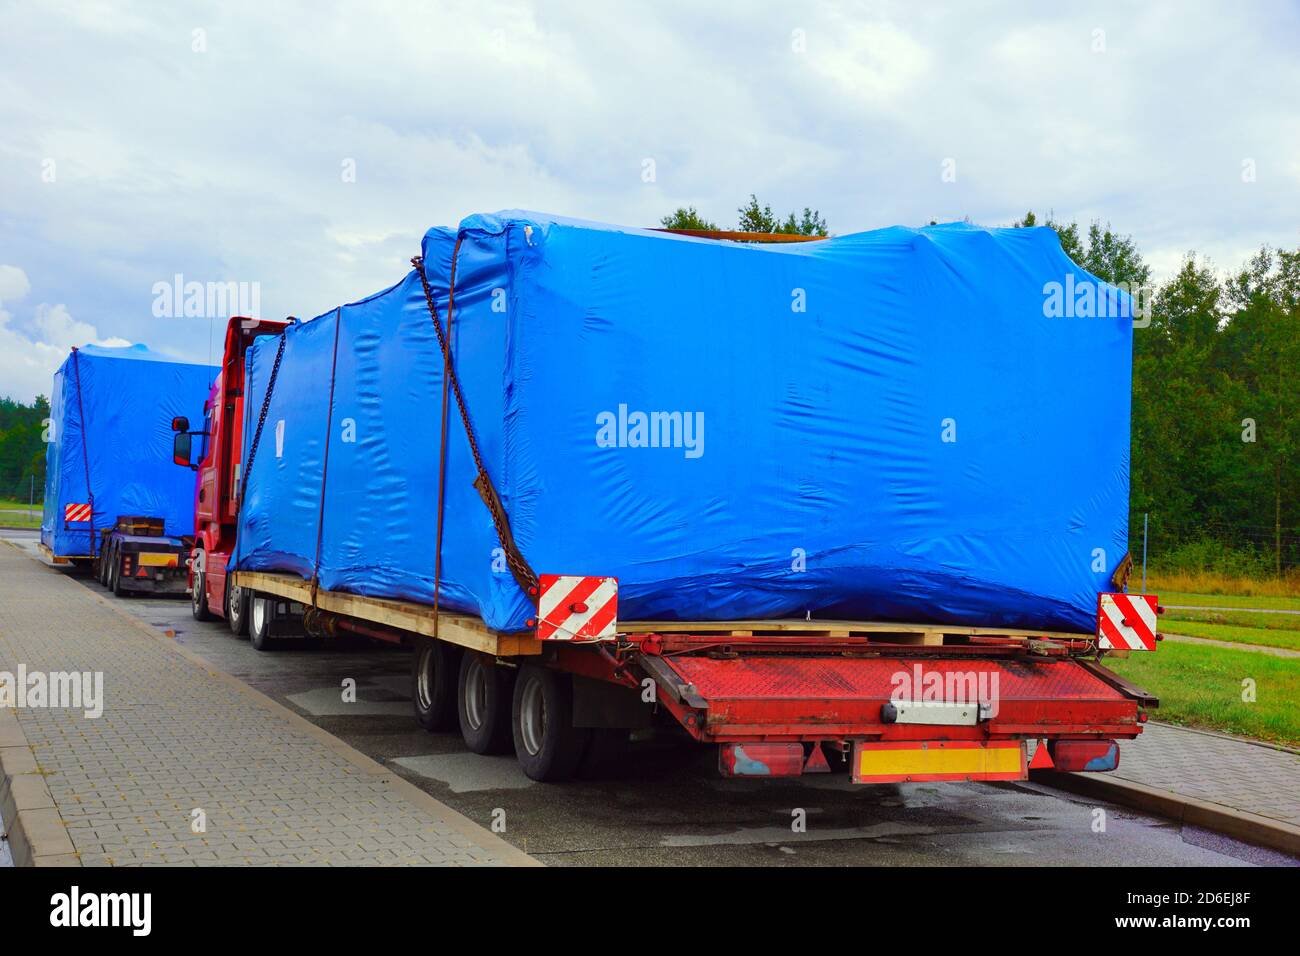 Un camión con un semirremolque especial para transportar cargas de gran tamaño. Carga de gran tamaño o convoy excepcional. Foto de stock